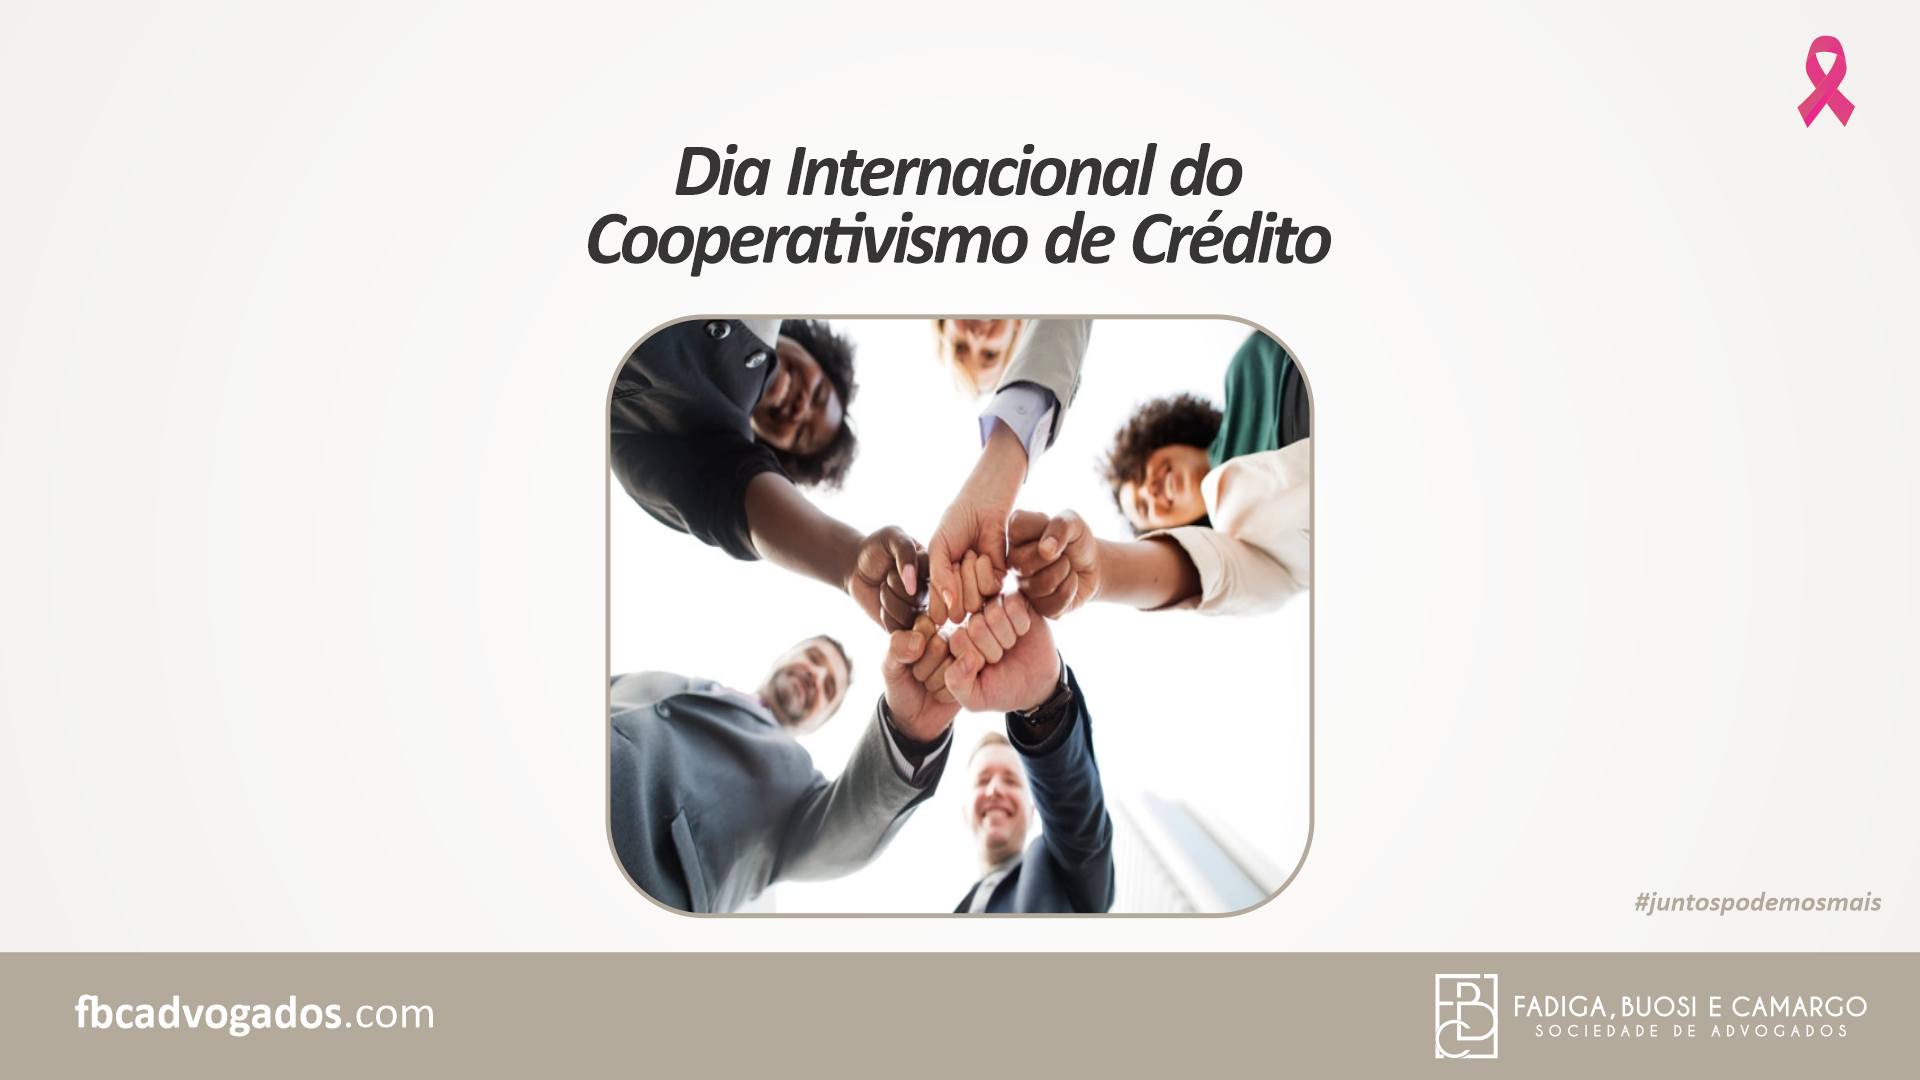 Dia Internacional do Cooperativismo de Crédito